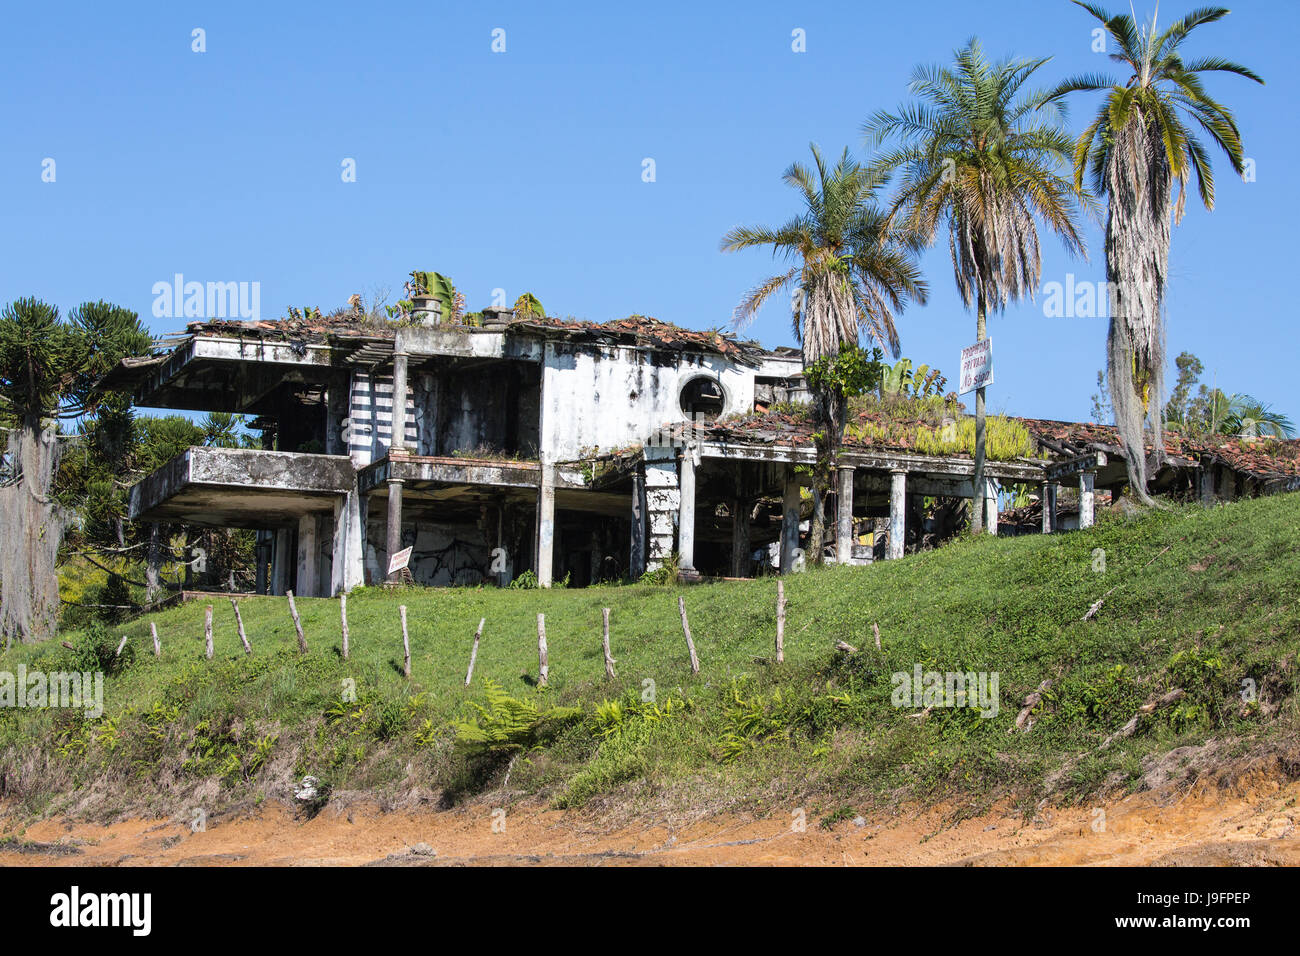 Casa pablo escobar fotografías e imágenes de alta resolución - Alamy